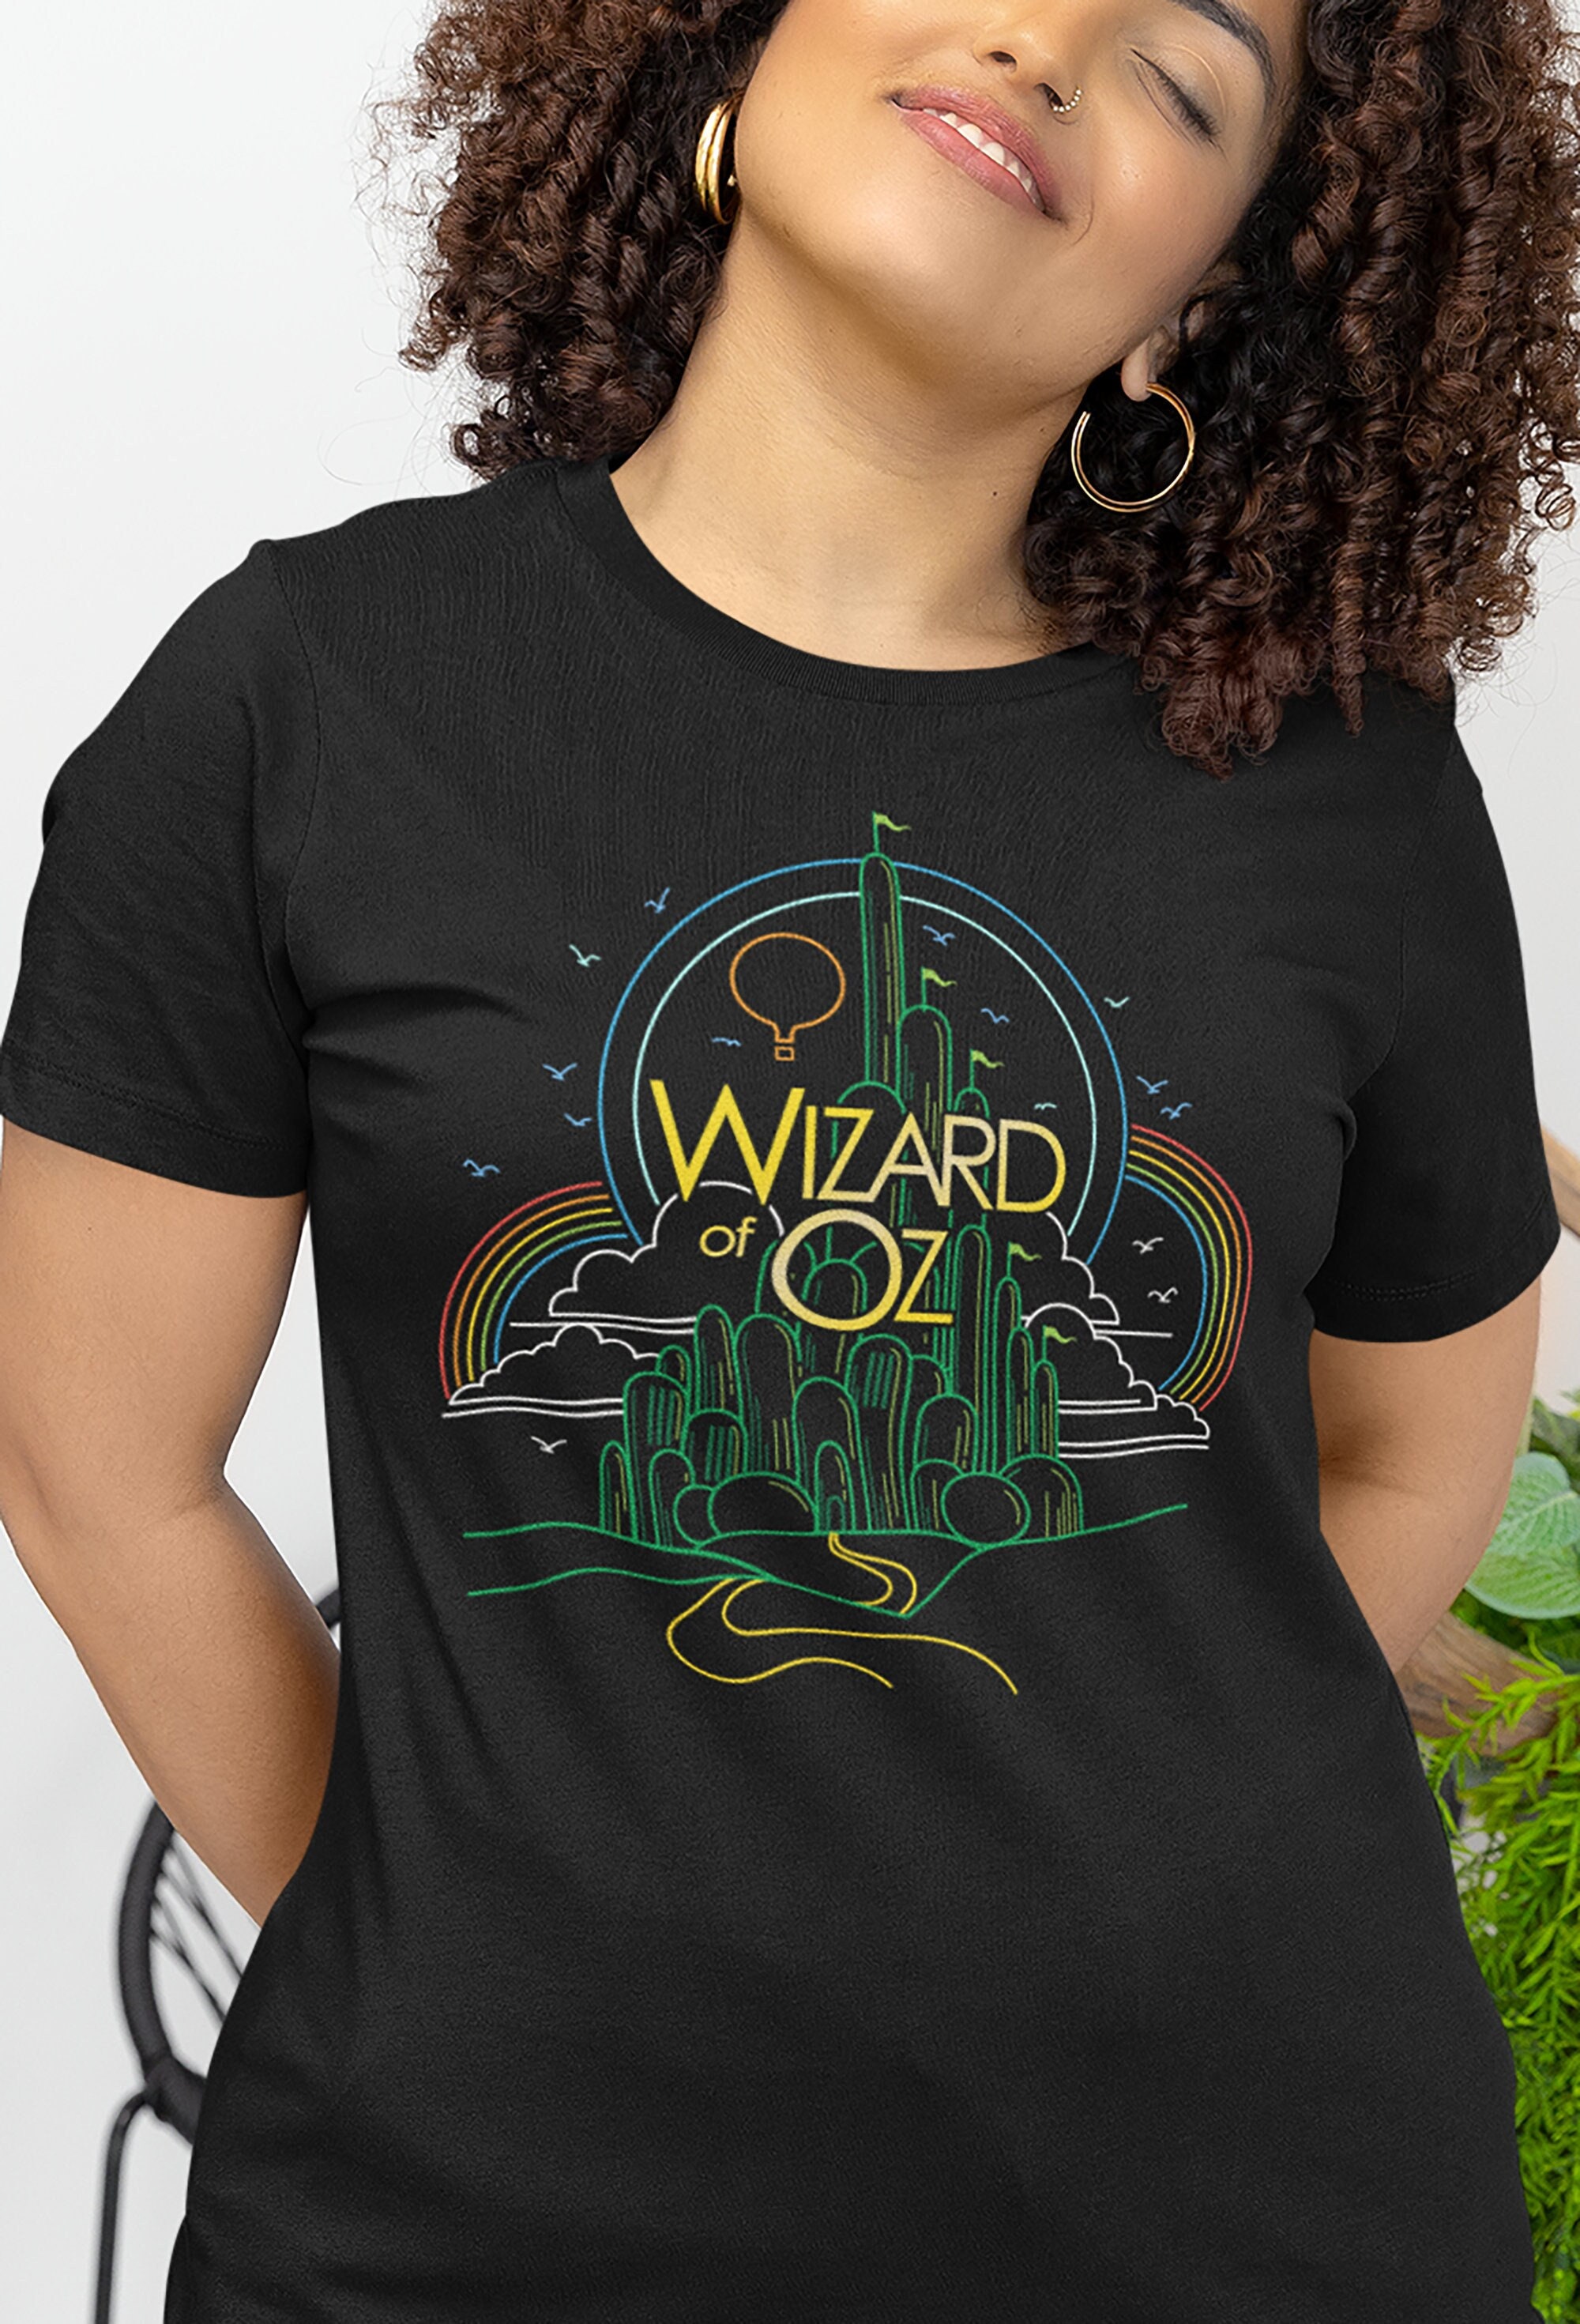 Wizard of Oz Updated Set Design Decor 2019